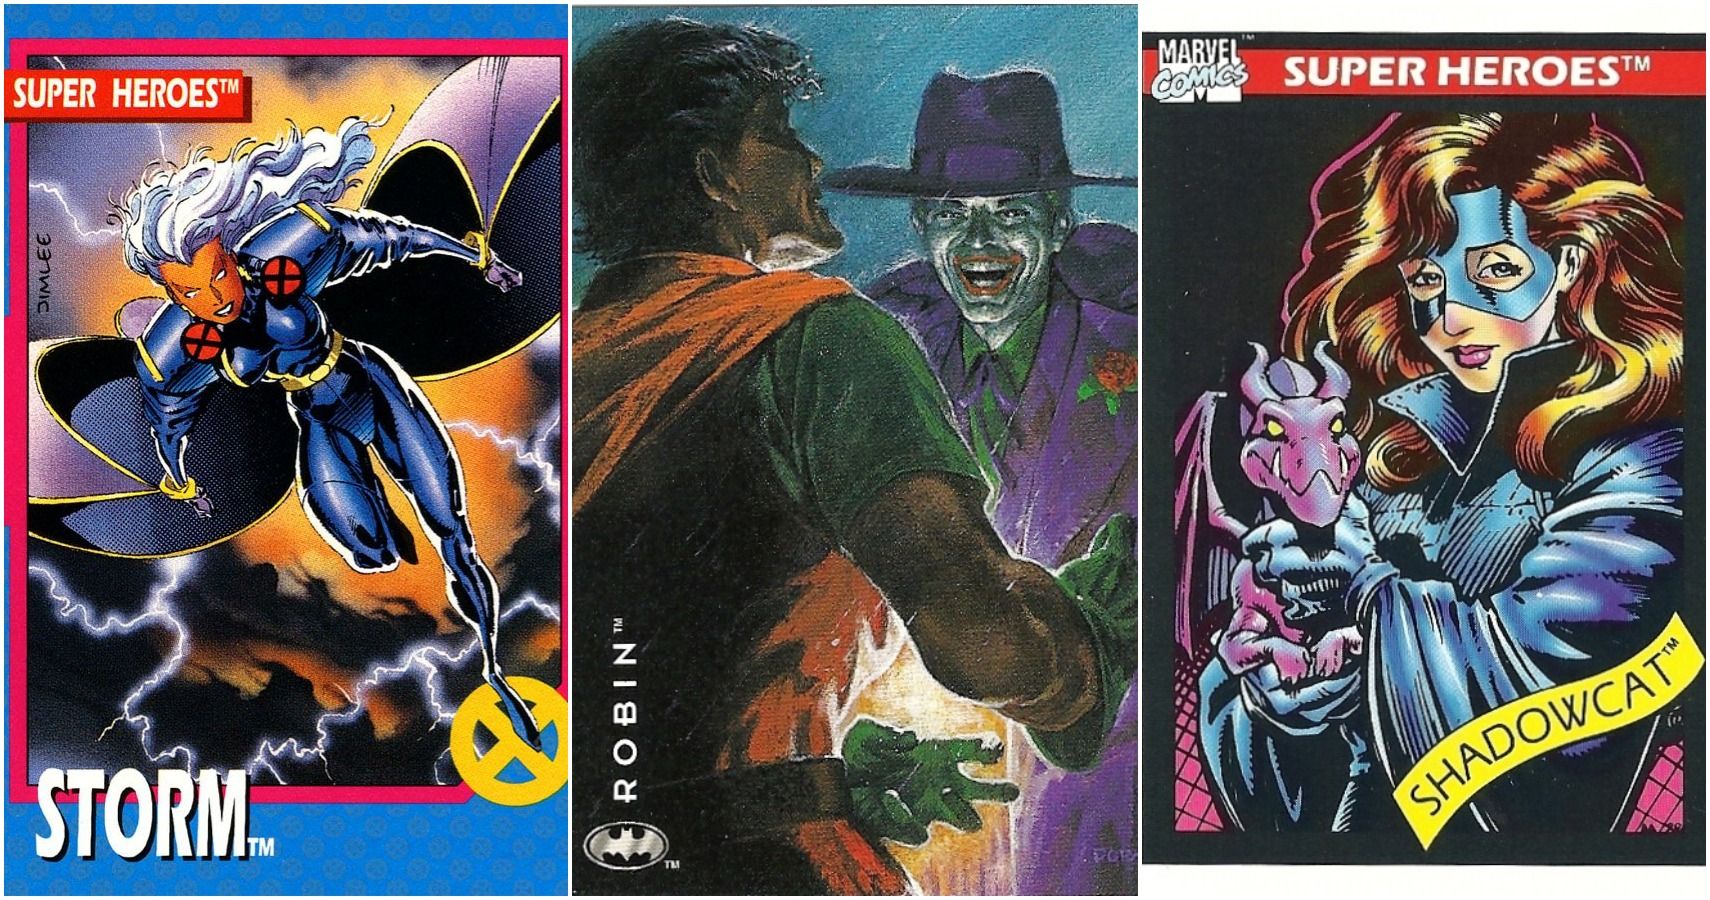 DC MASTER SERIES CARD SET BATMAN SUPERMAN FLASH GREAT ART SEE PICS ALL ARE SHOWN 